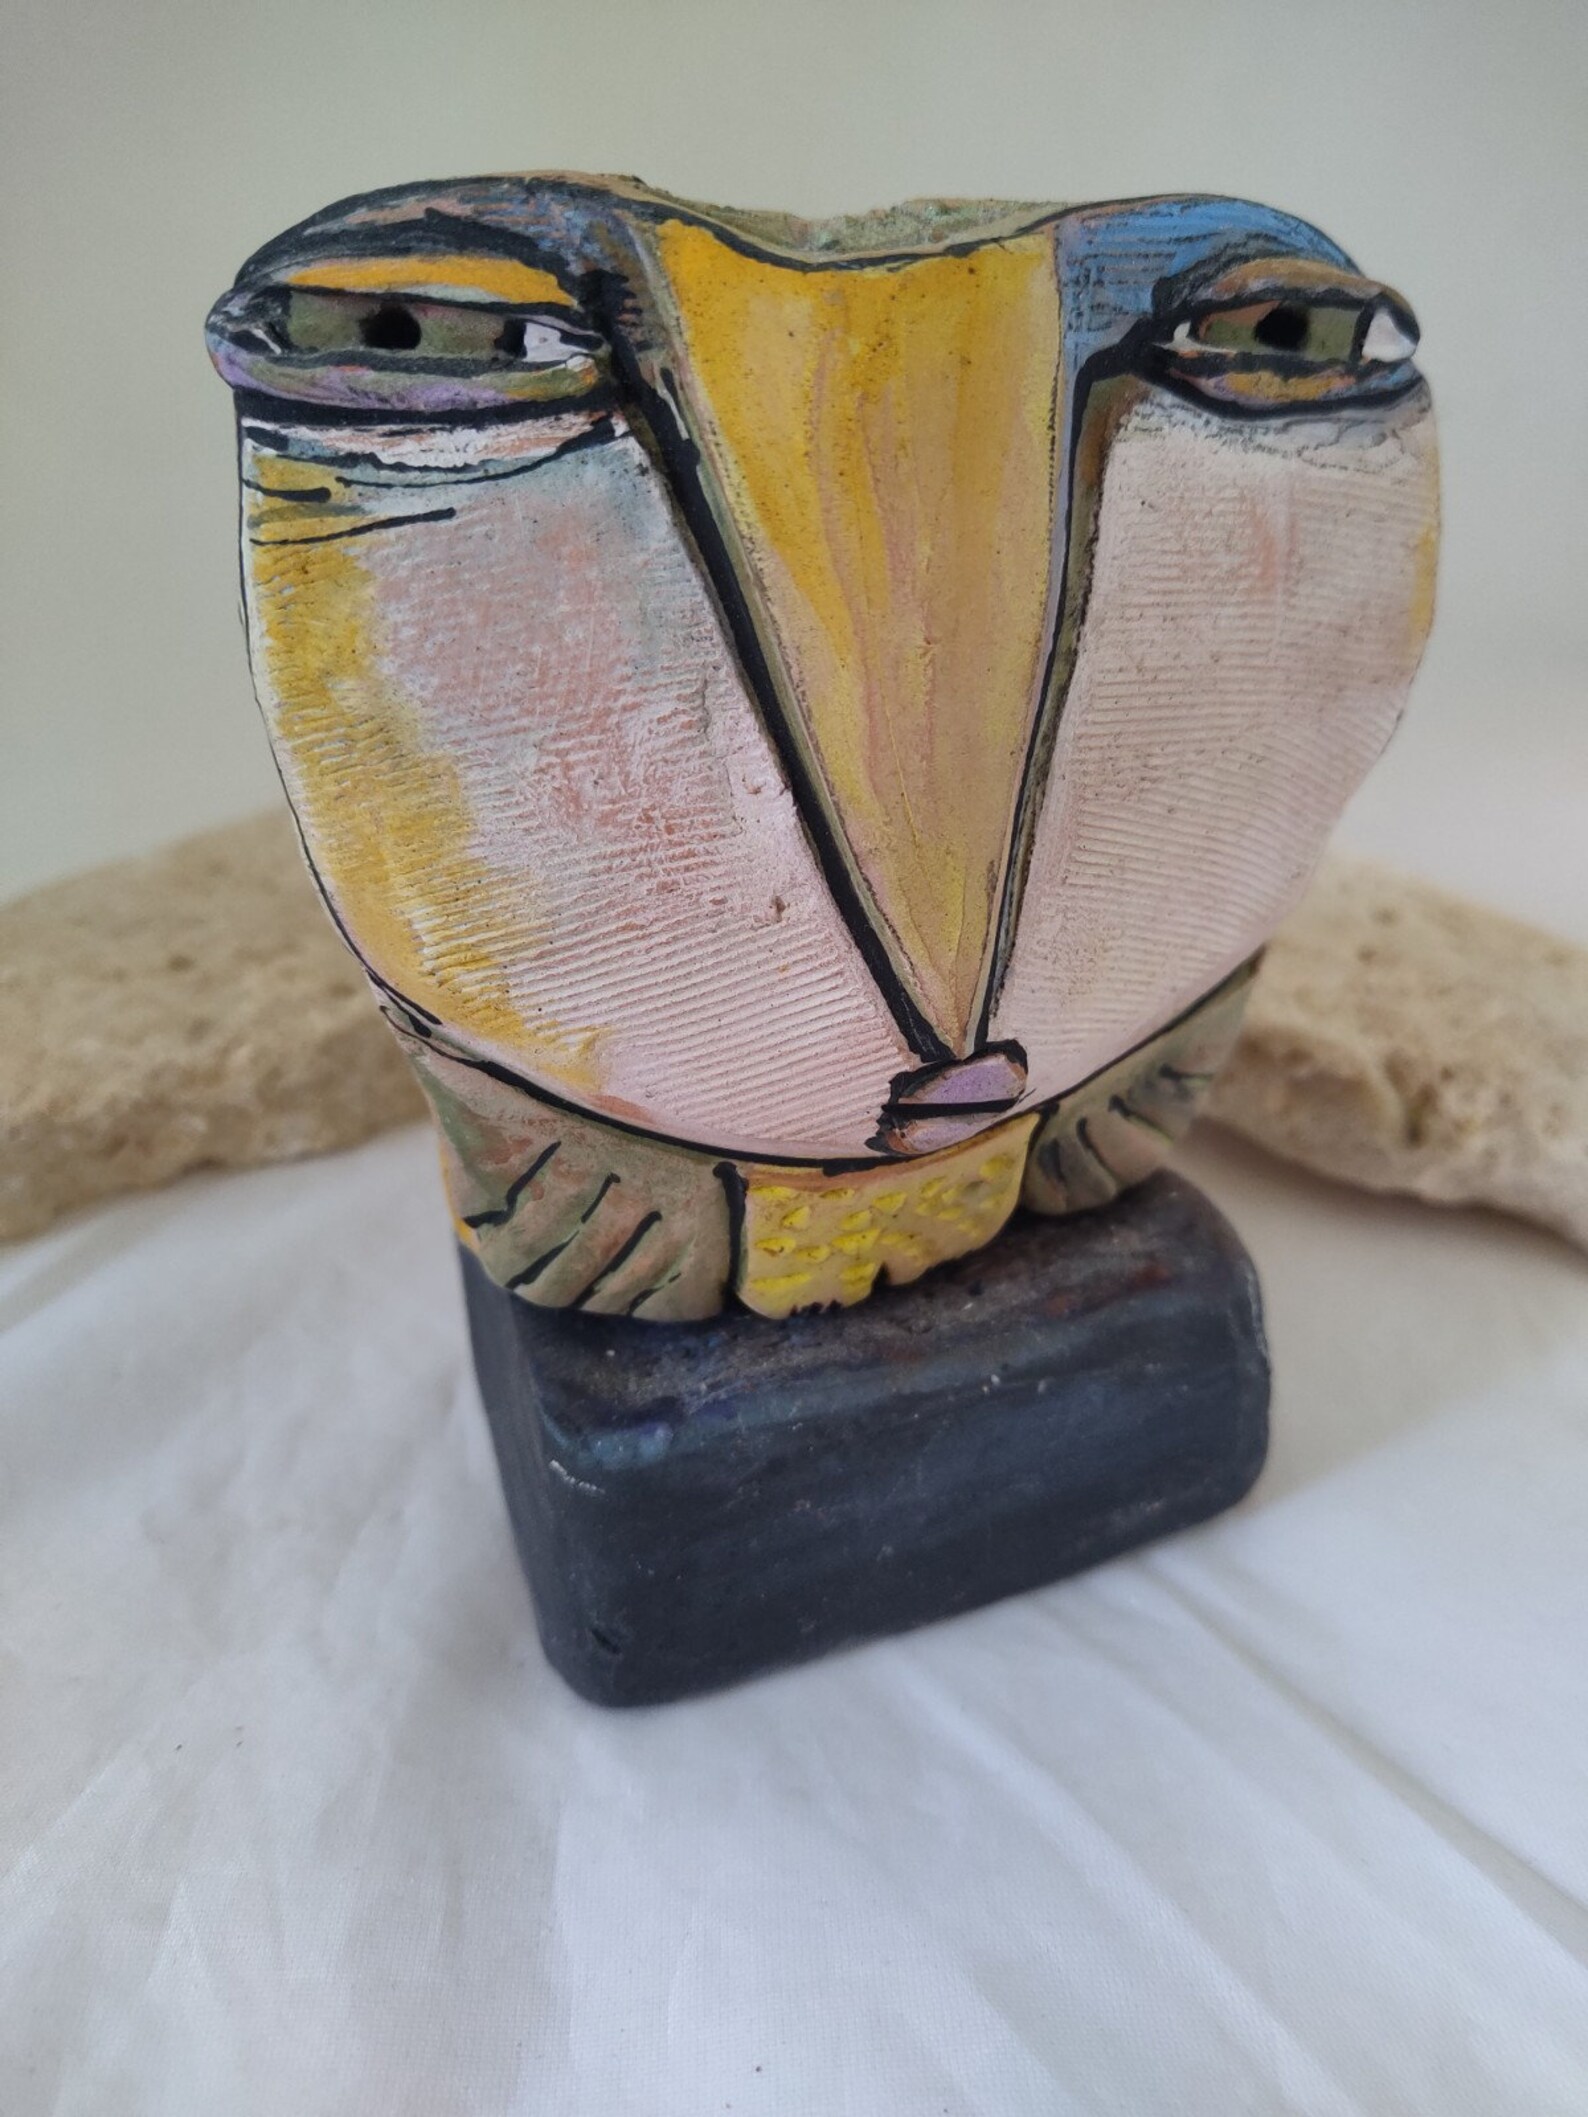 Owl ART wise old owl ceramic sculpture nick-nack art sculpture | Etsy